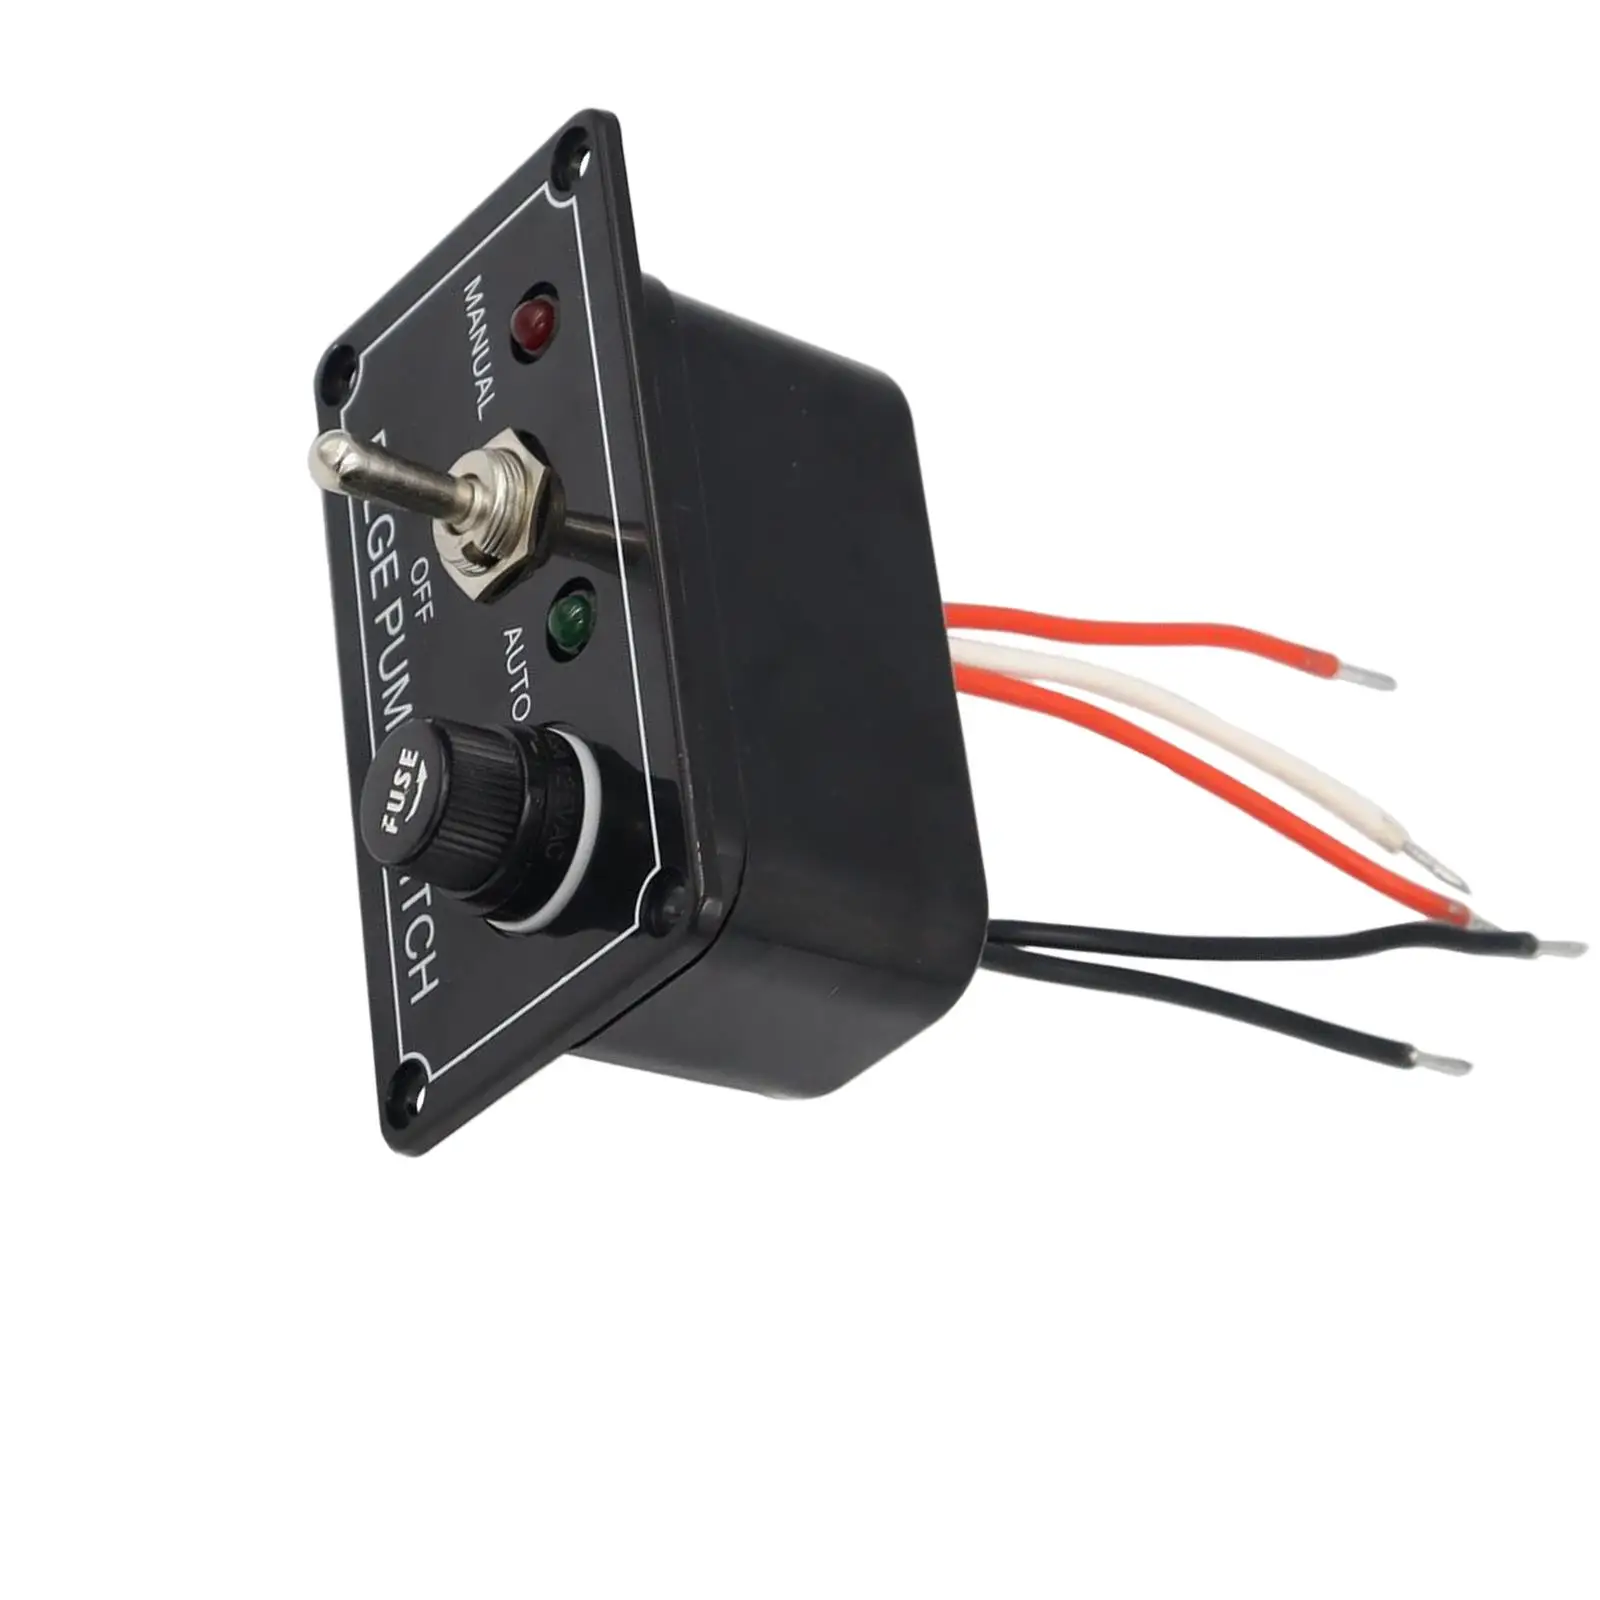 Rocker Toggle Bilge Pump Switch Panel, Fuse LED Indicator, for Marine Cars Yachts Parts.